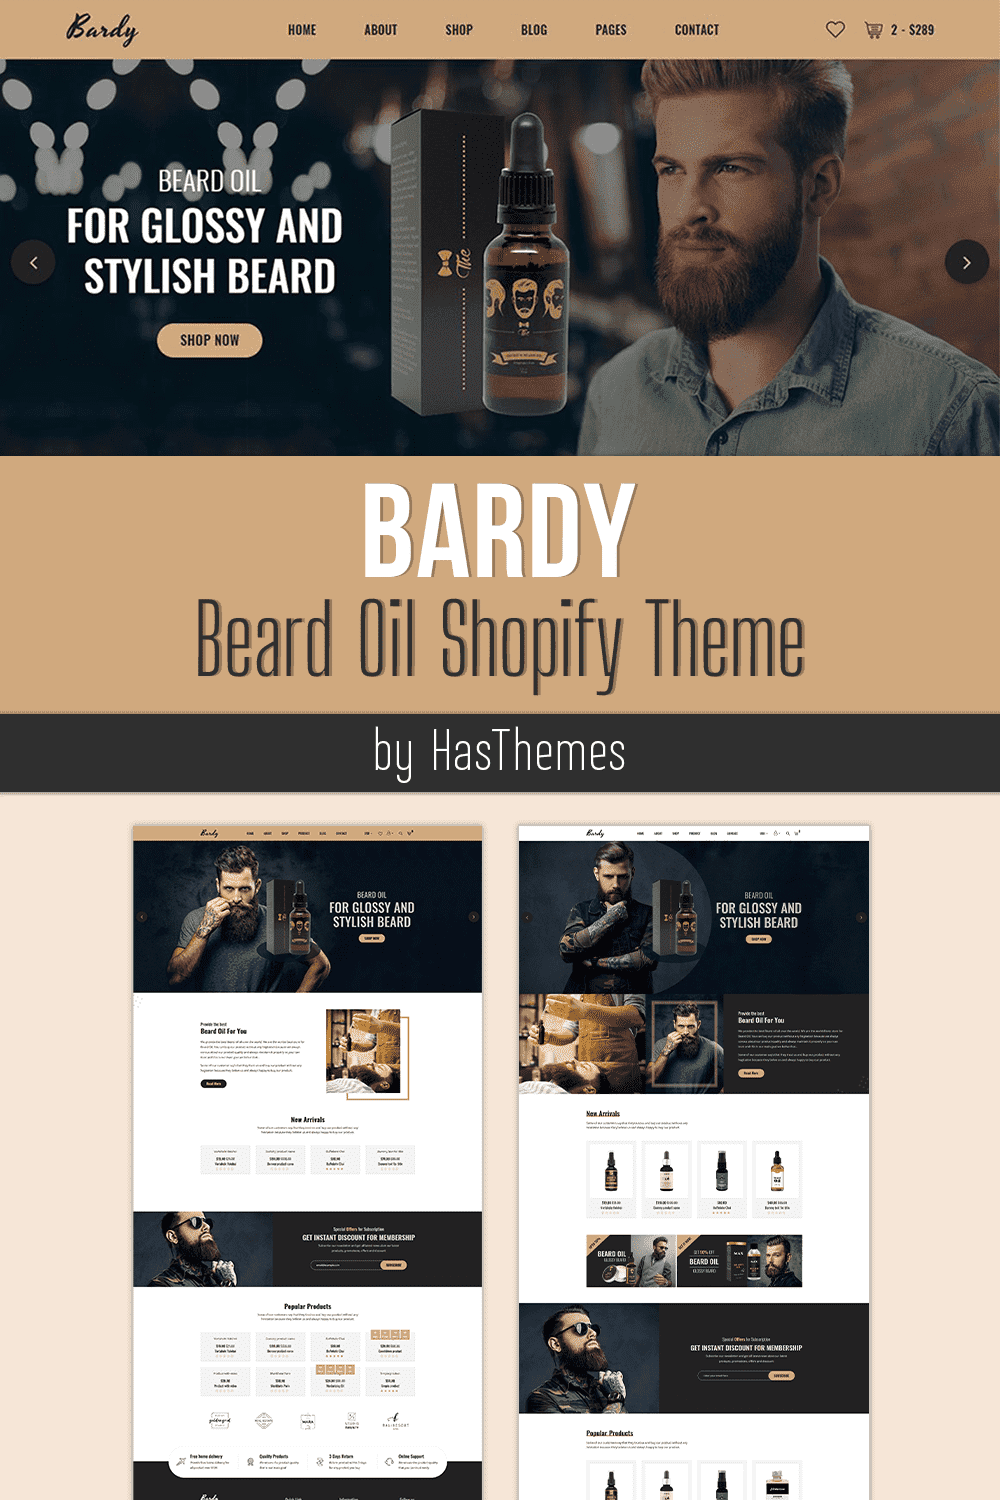 Slides of Bardy beard oil shopify theme.